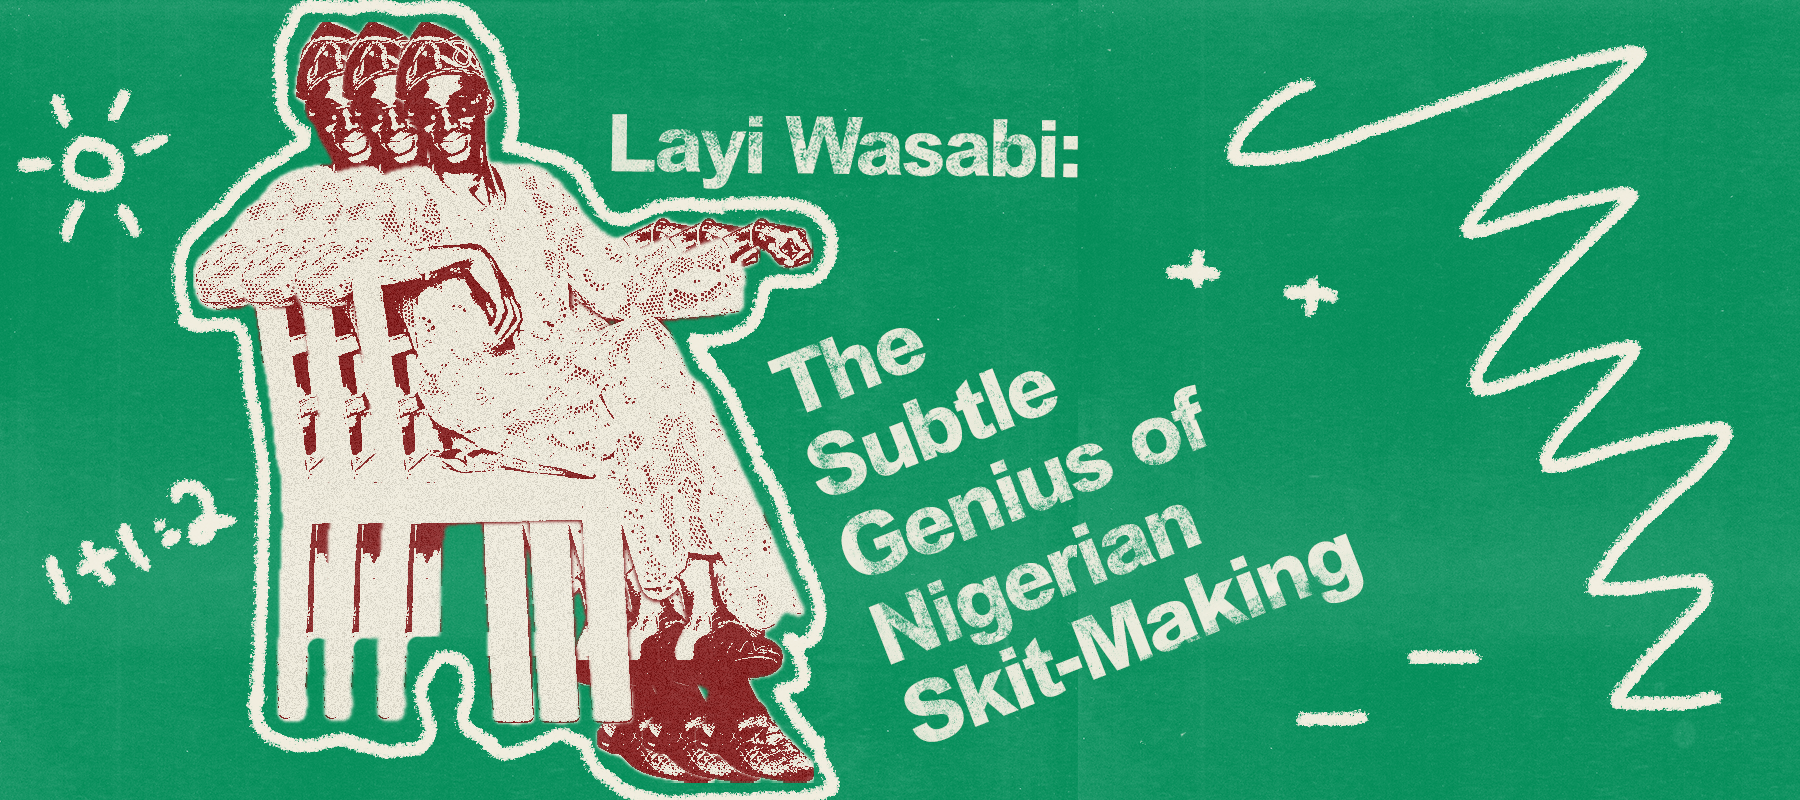 Layi Wasabi: The Subtle Genius of Nigerian Skit-Making